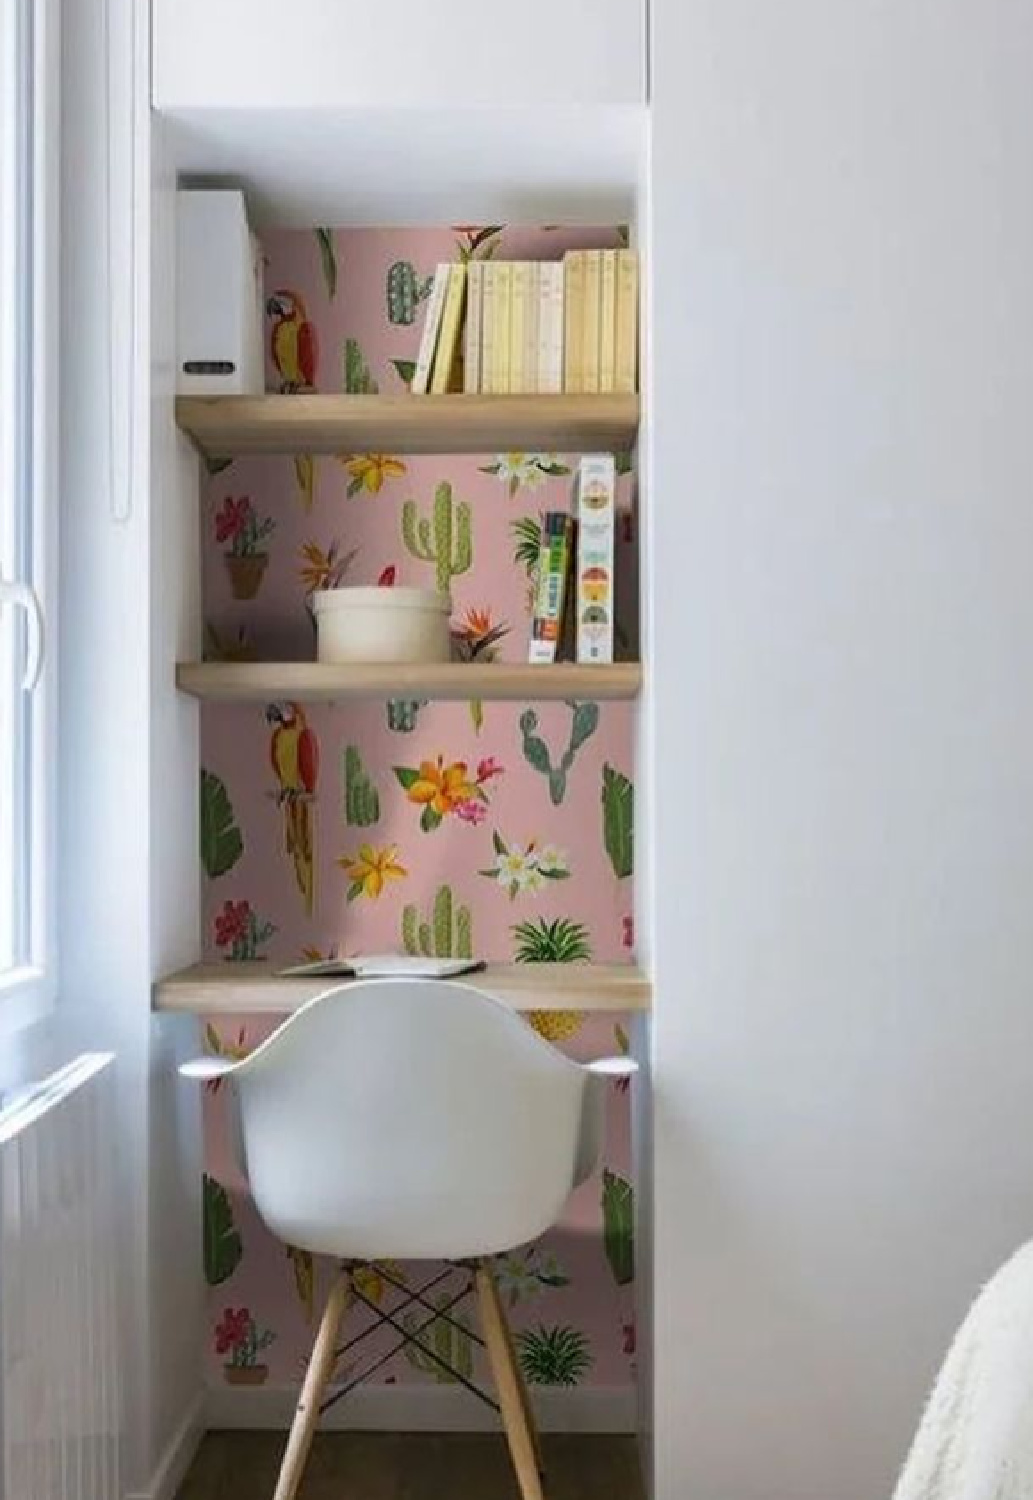 Beautifully designed cloffice with wallpaper, shelves, and modern chair - via @designhallyu. #cloffice #homeofficedesign #closetoffice